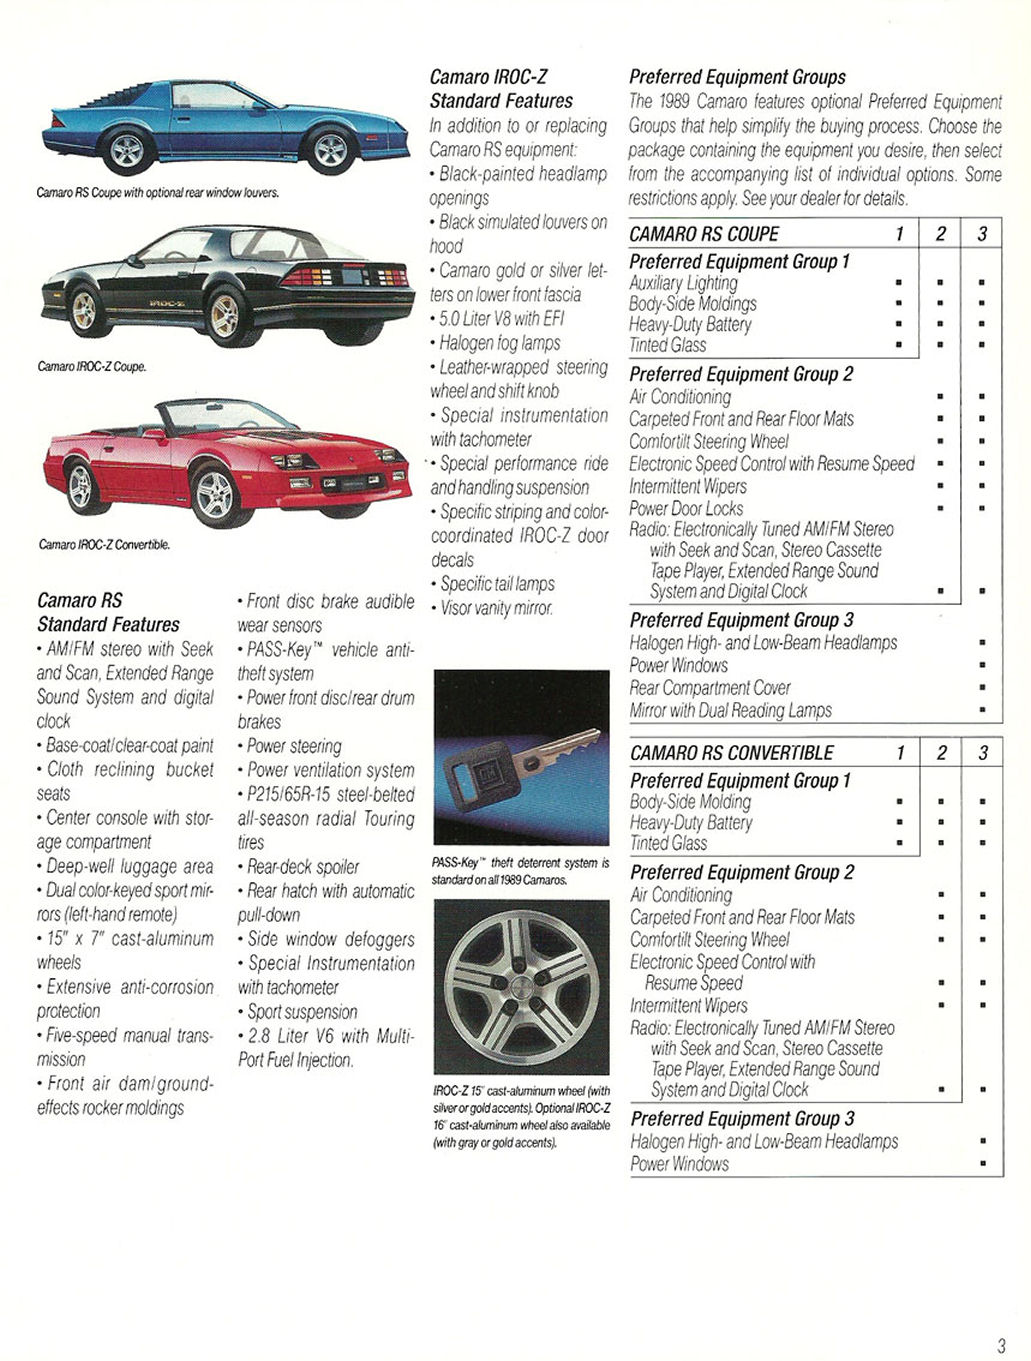 1989_Chevrolet_Camaro-04